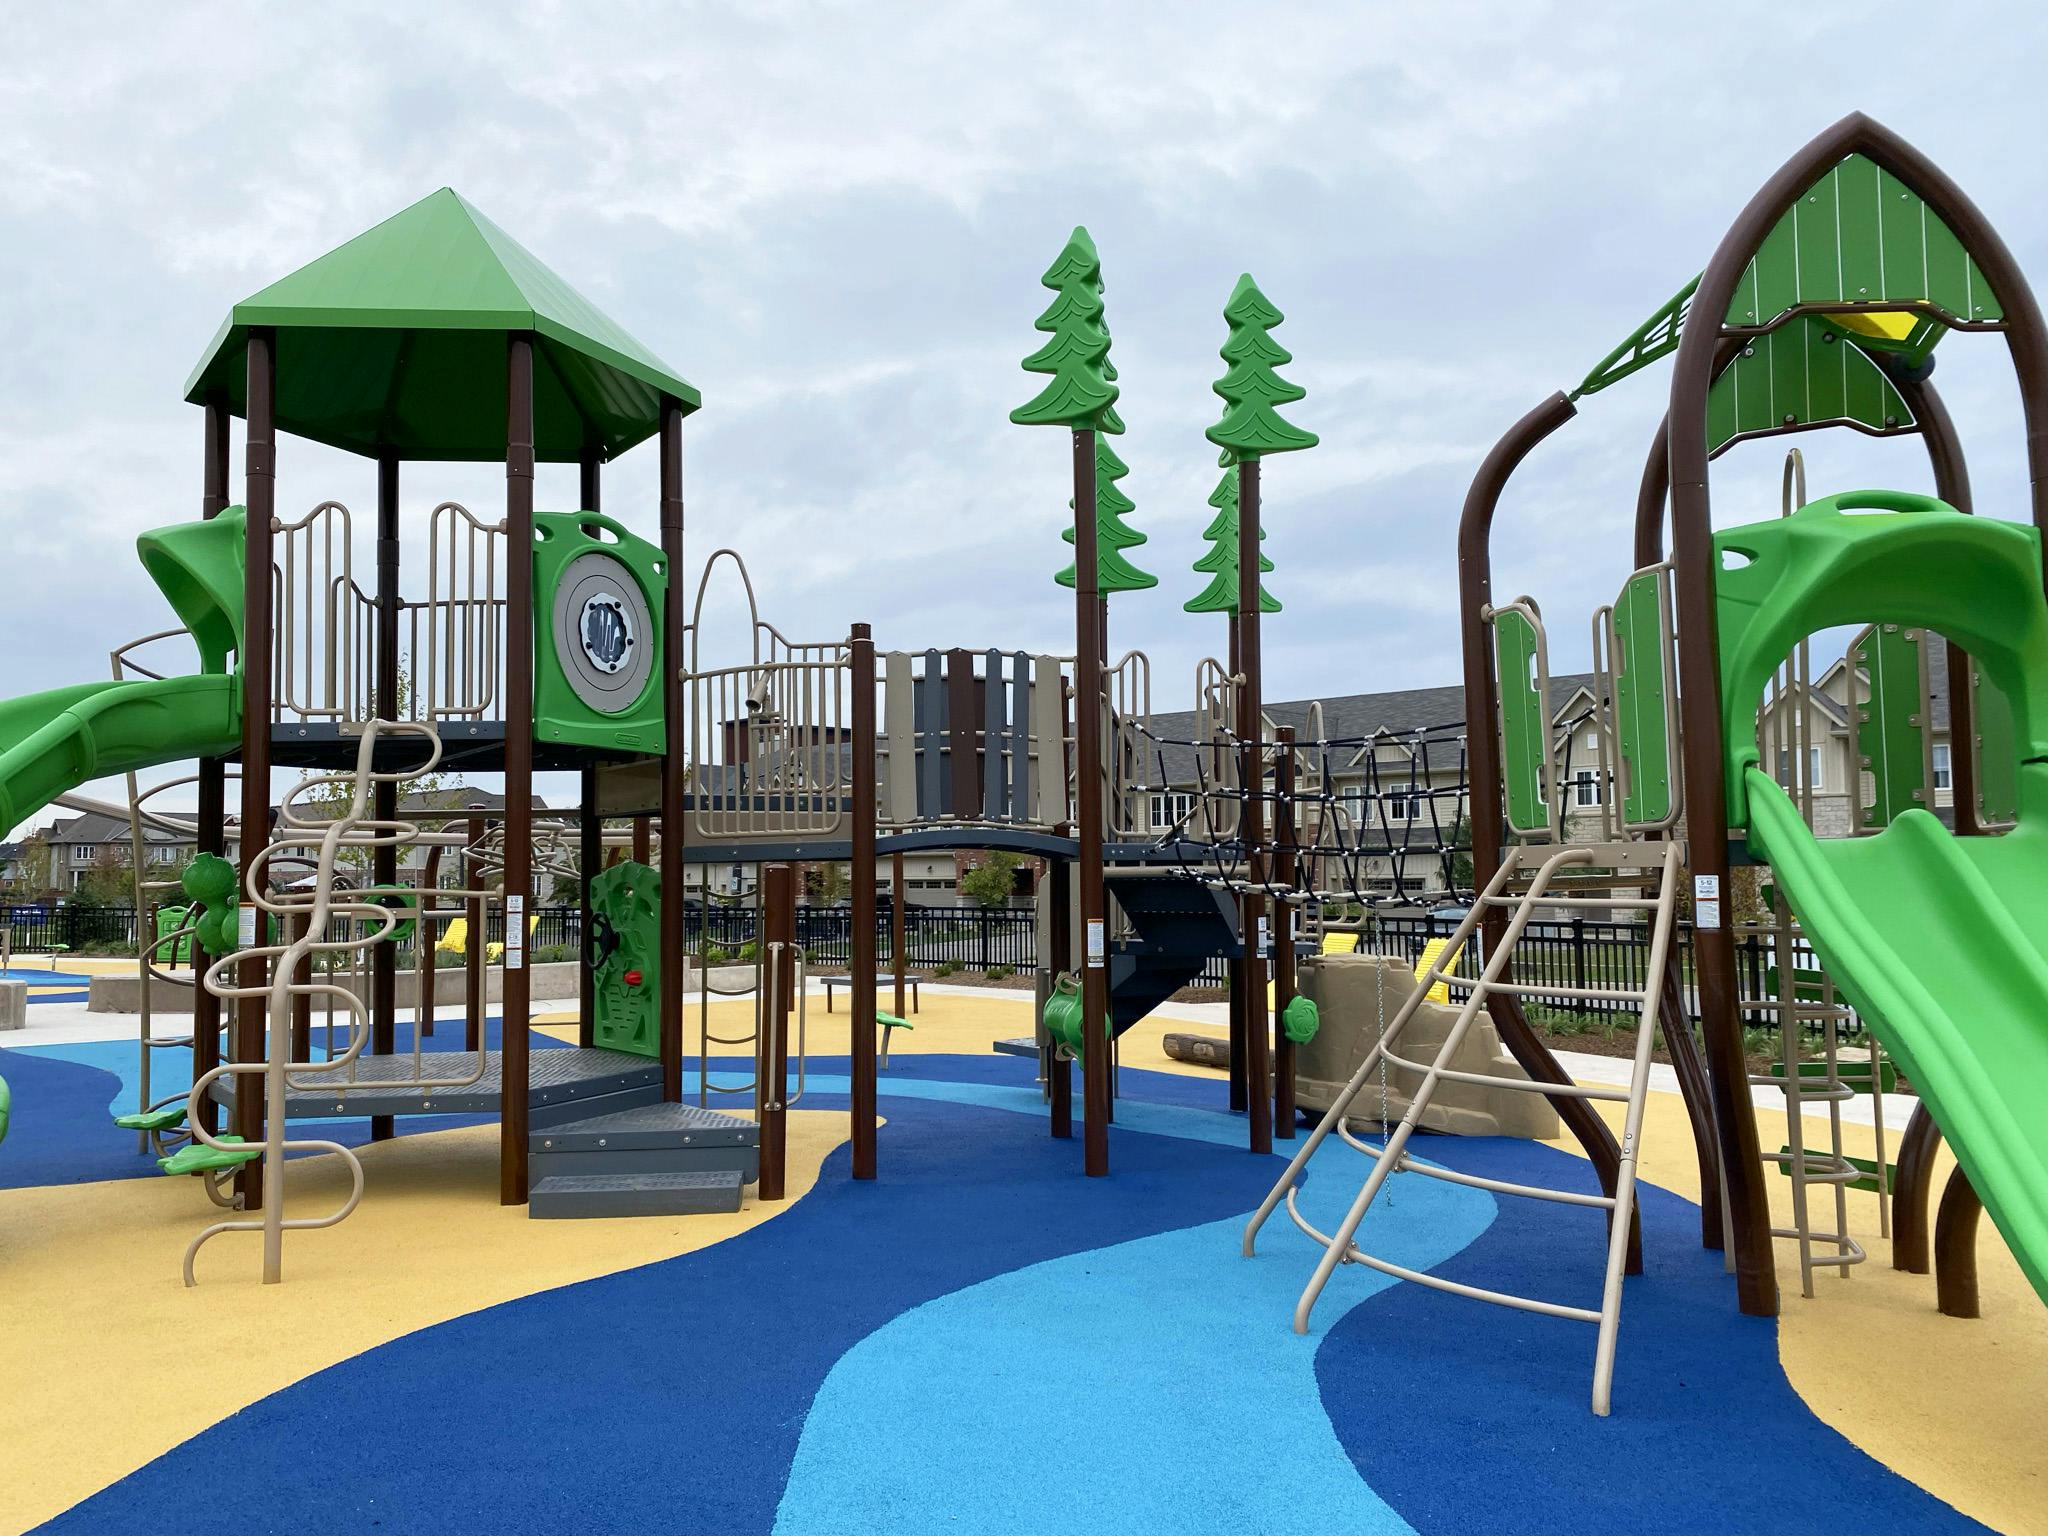 Playground - Rotary Park, Lincoln